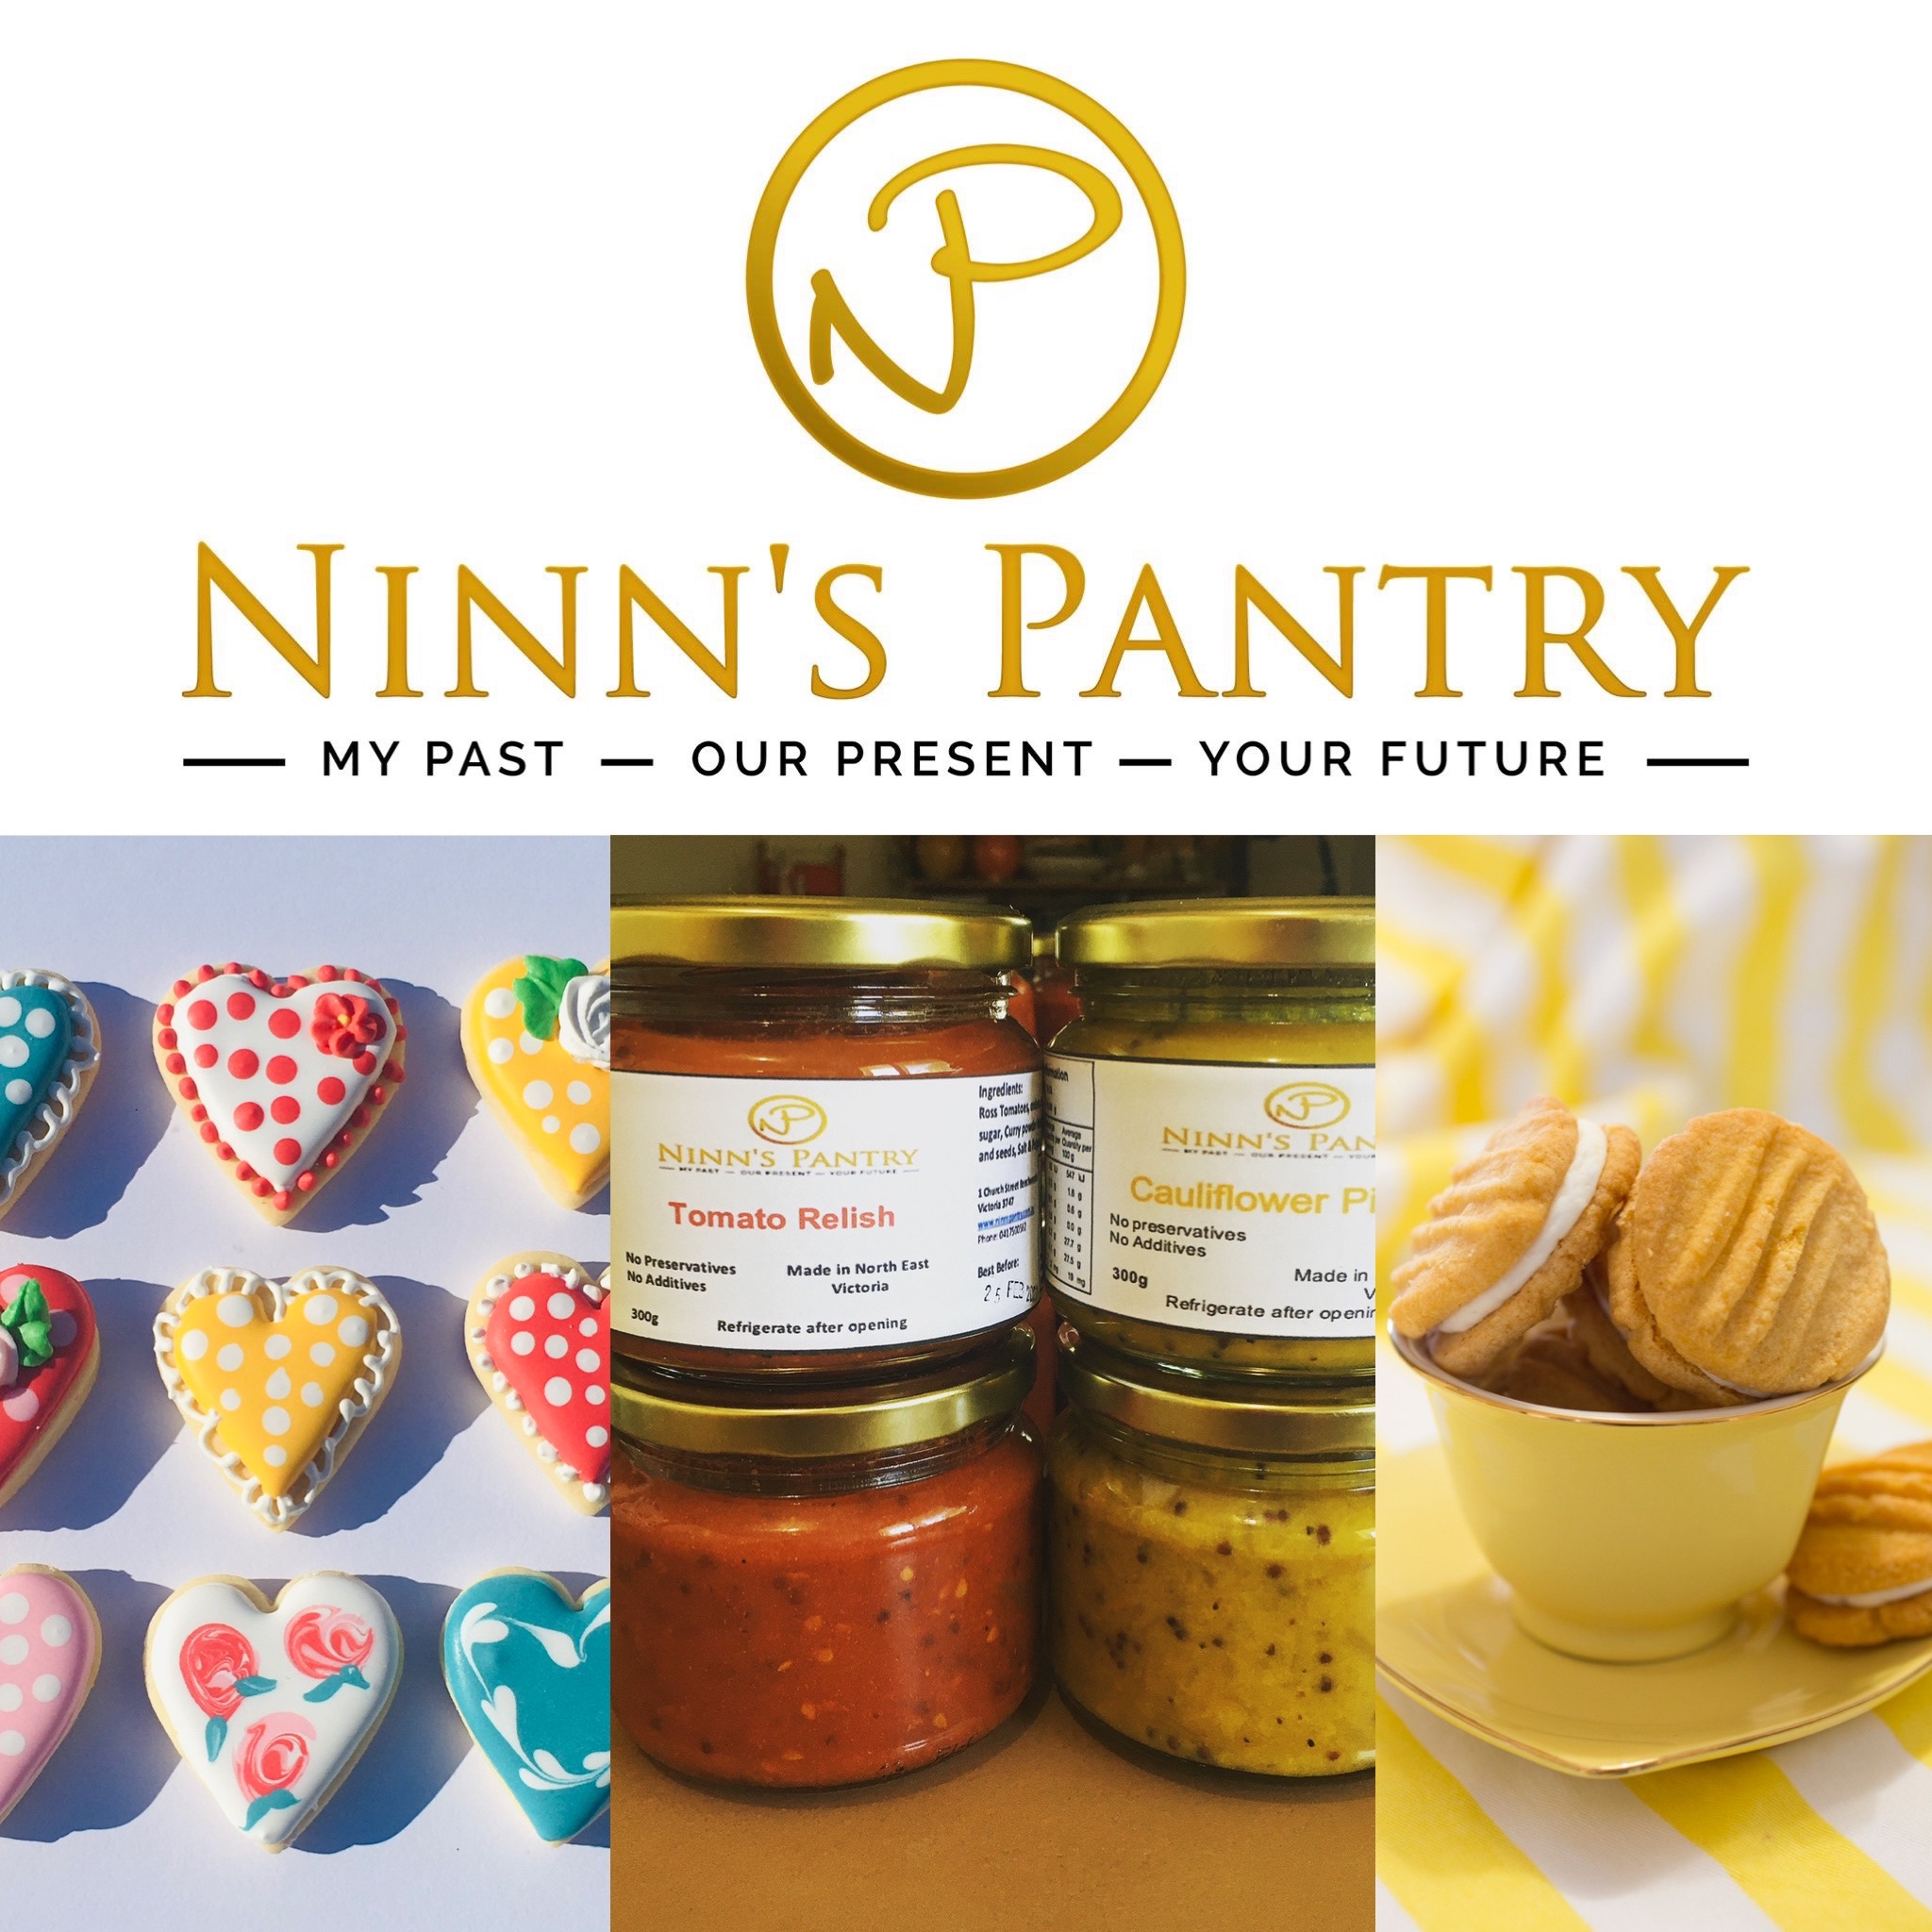 Ninn's Pantry